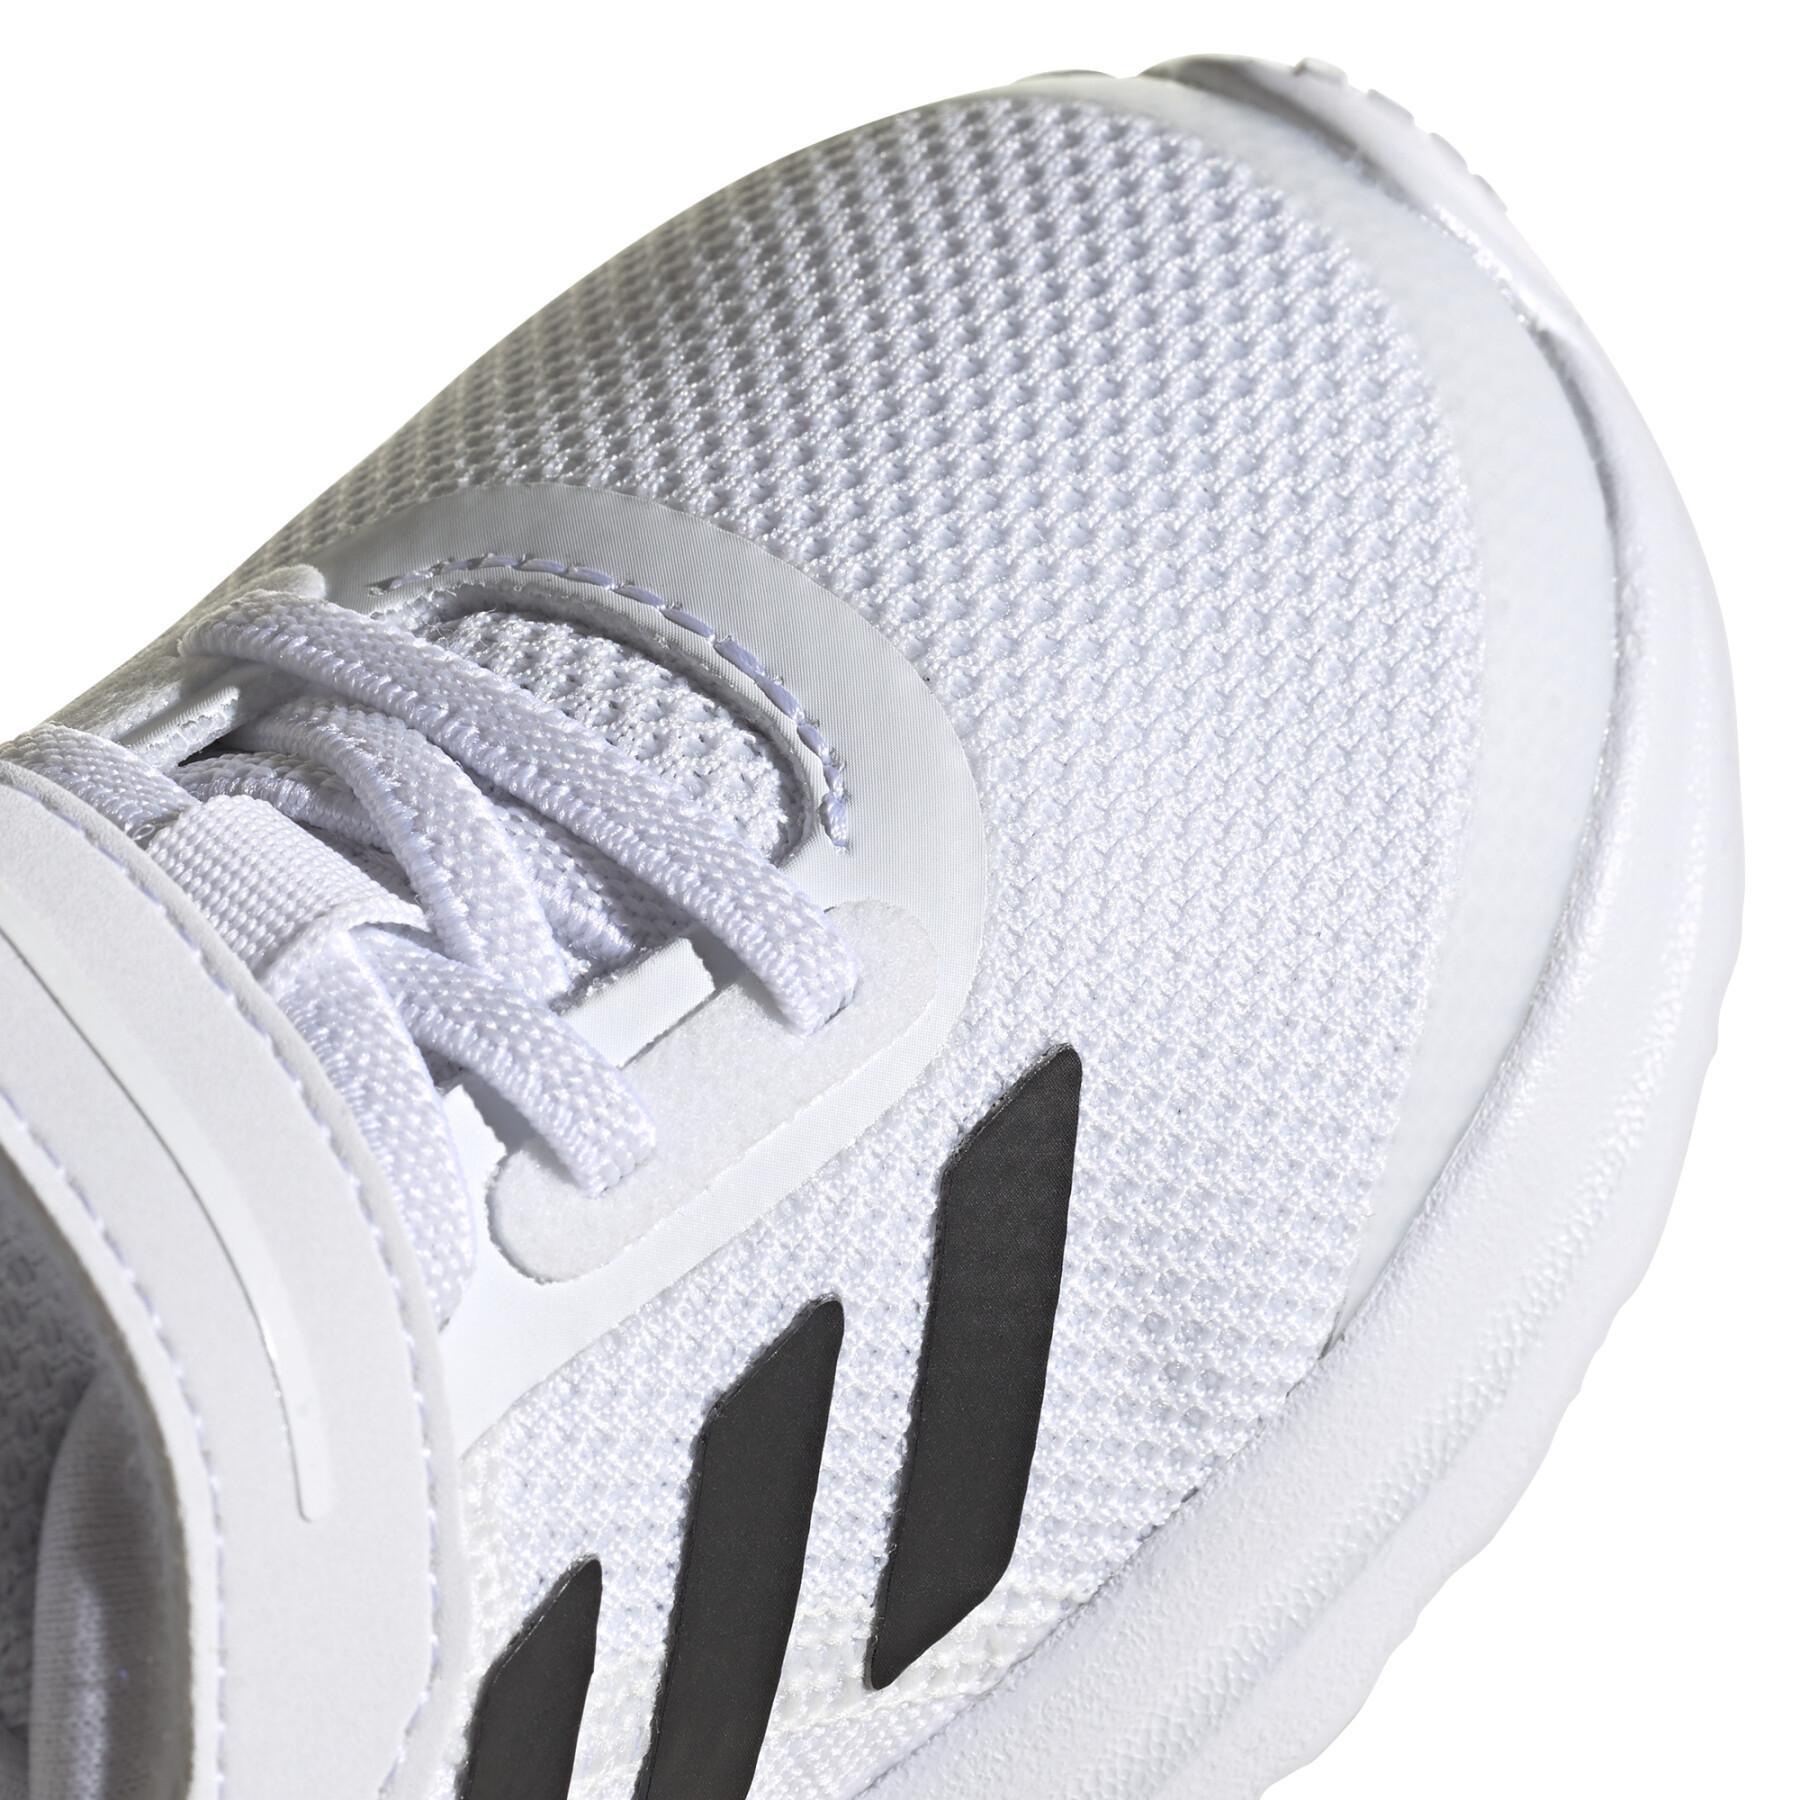 Sneakers adidas FortaRun Running 2020